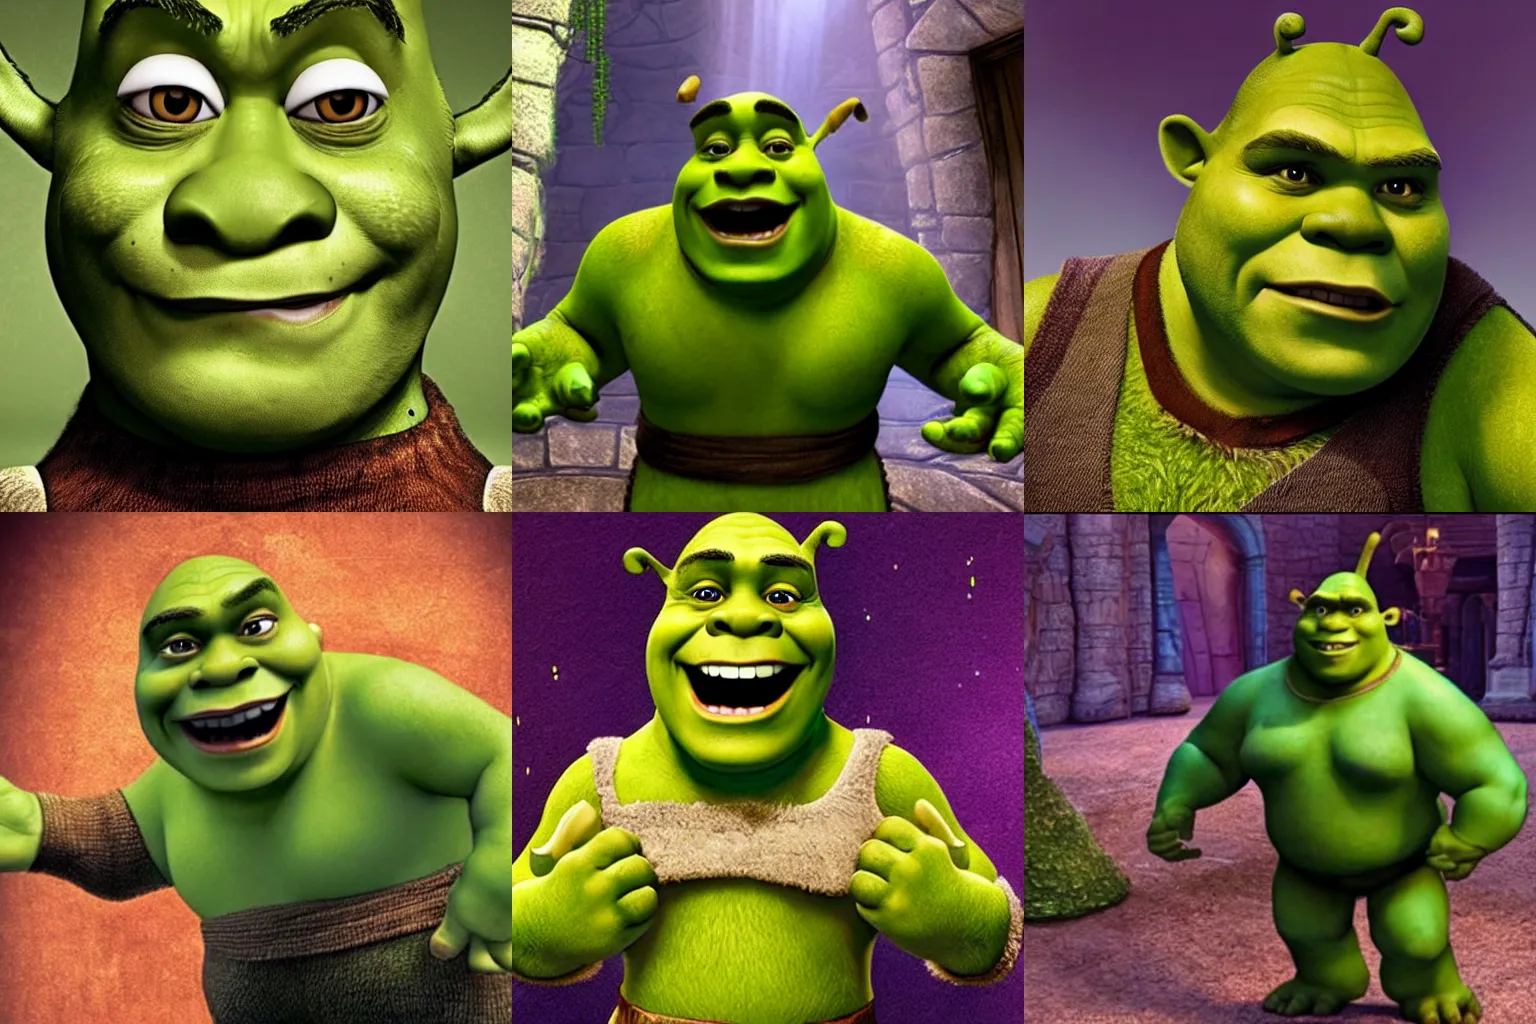 Prompt: Shrek starring in THE MASK